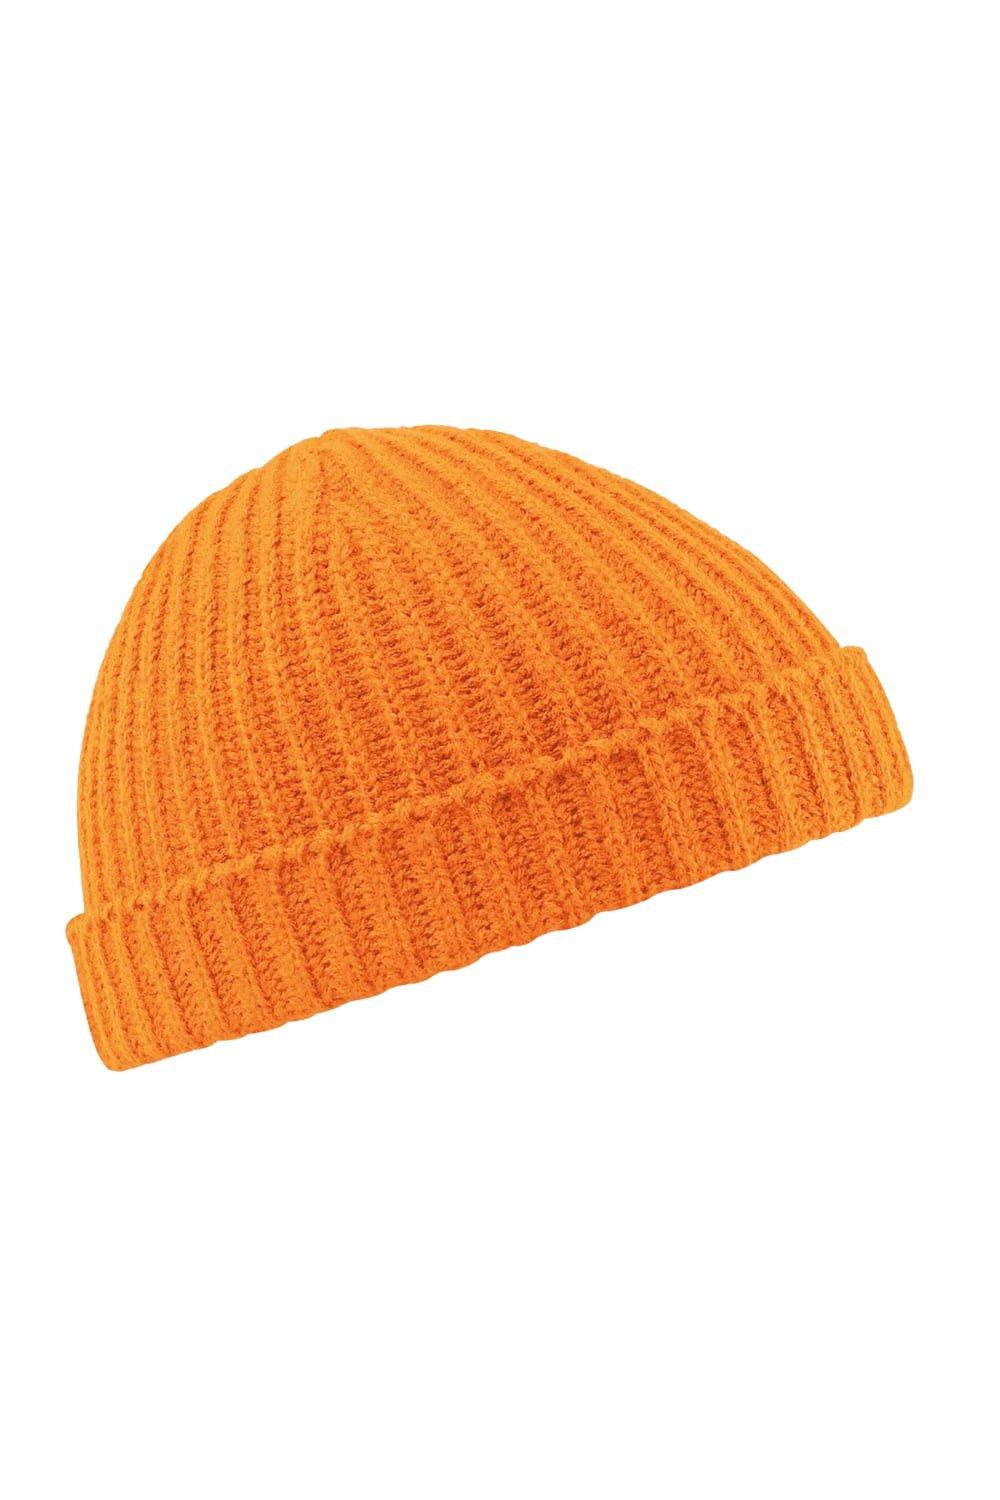 Траулерная шапка Beechfield, оранжевый траулерная шапка beechfield красный